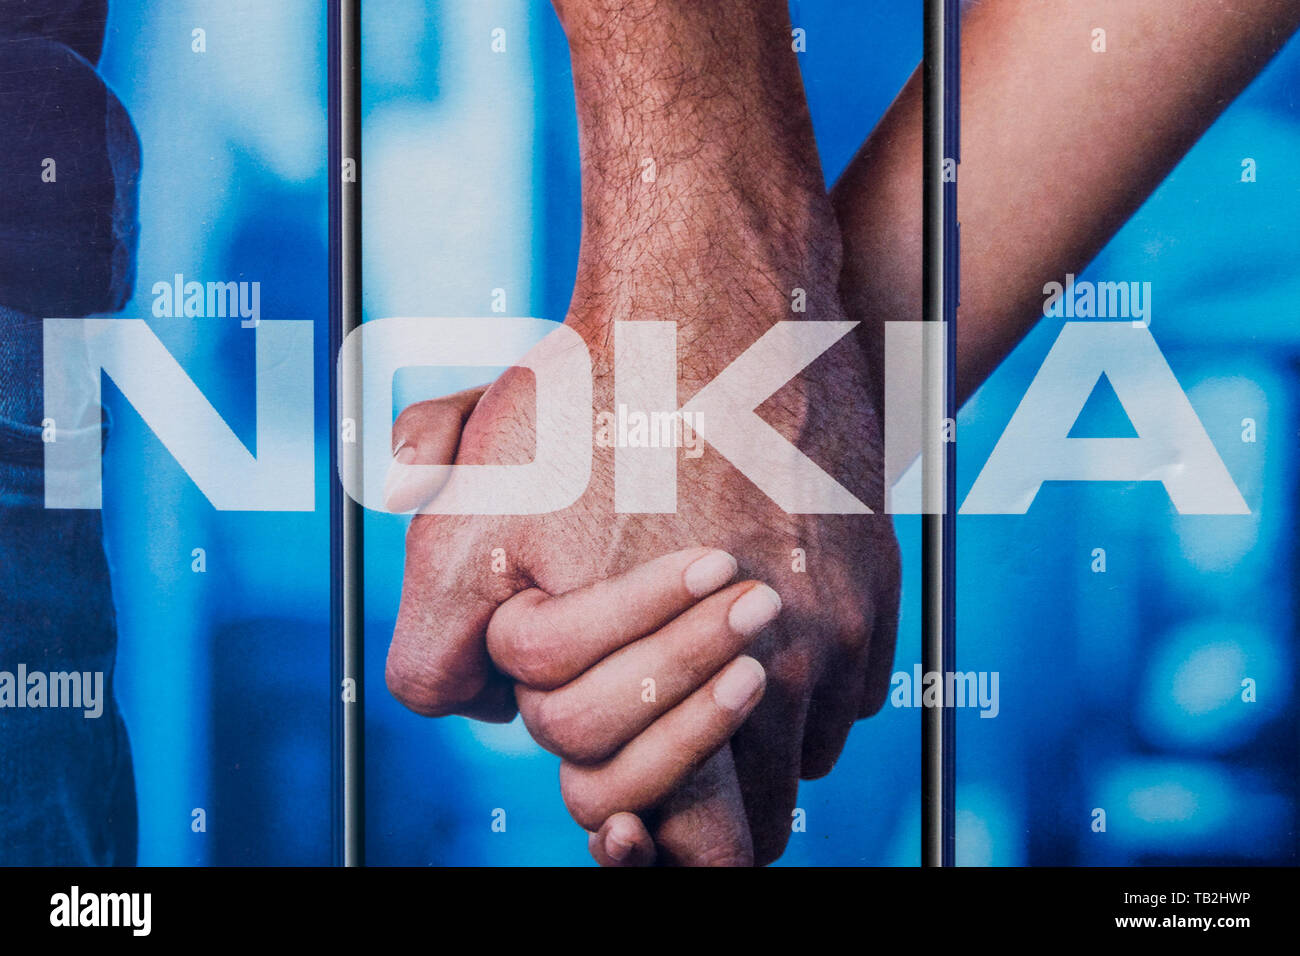 Cluj, Romania - May 13, 2019: Nokia Corporation, a Finnish multinational telecommunications, information technology, and consumer electronics company  Stock Photo